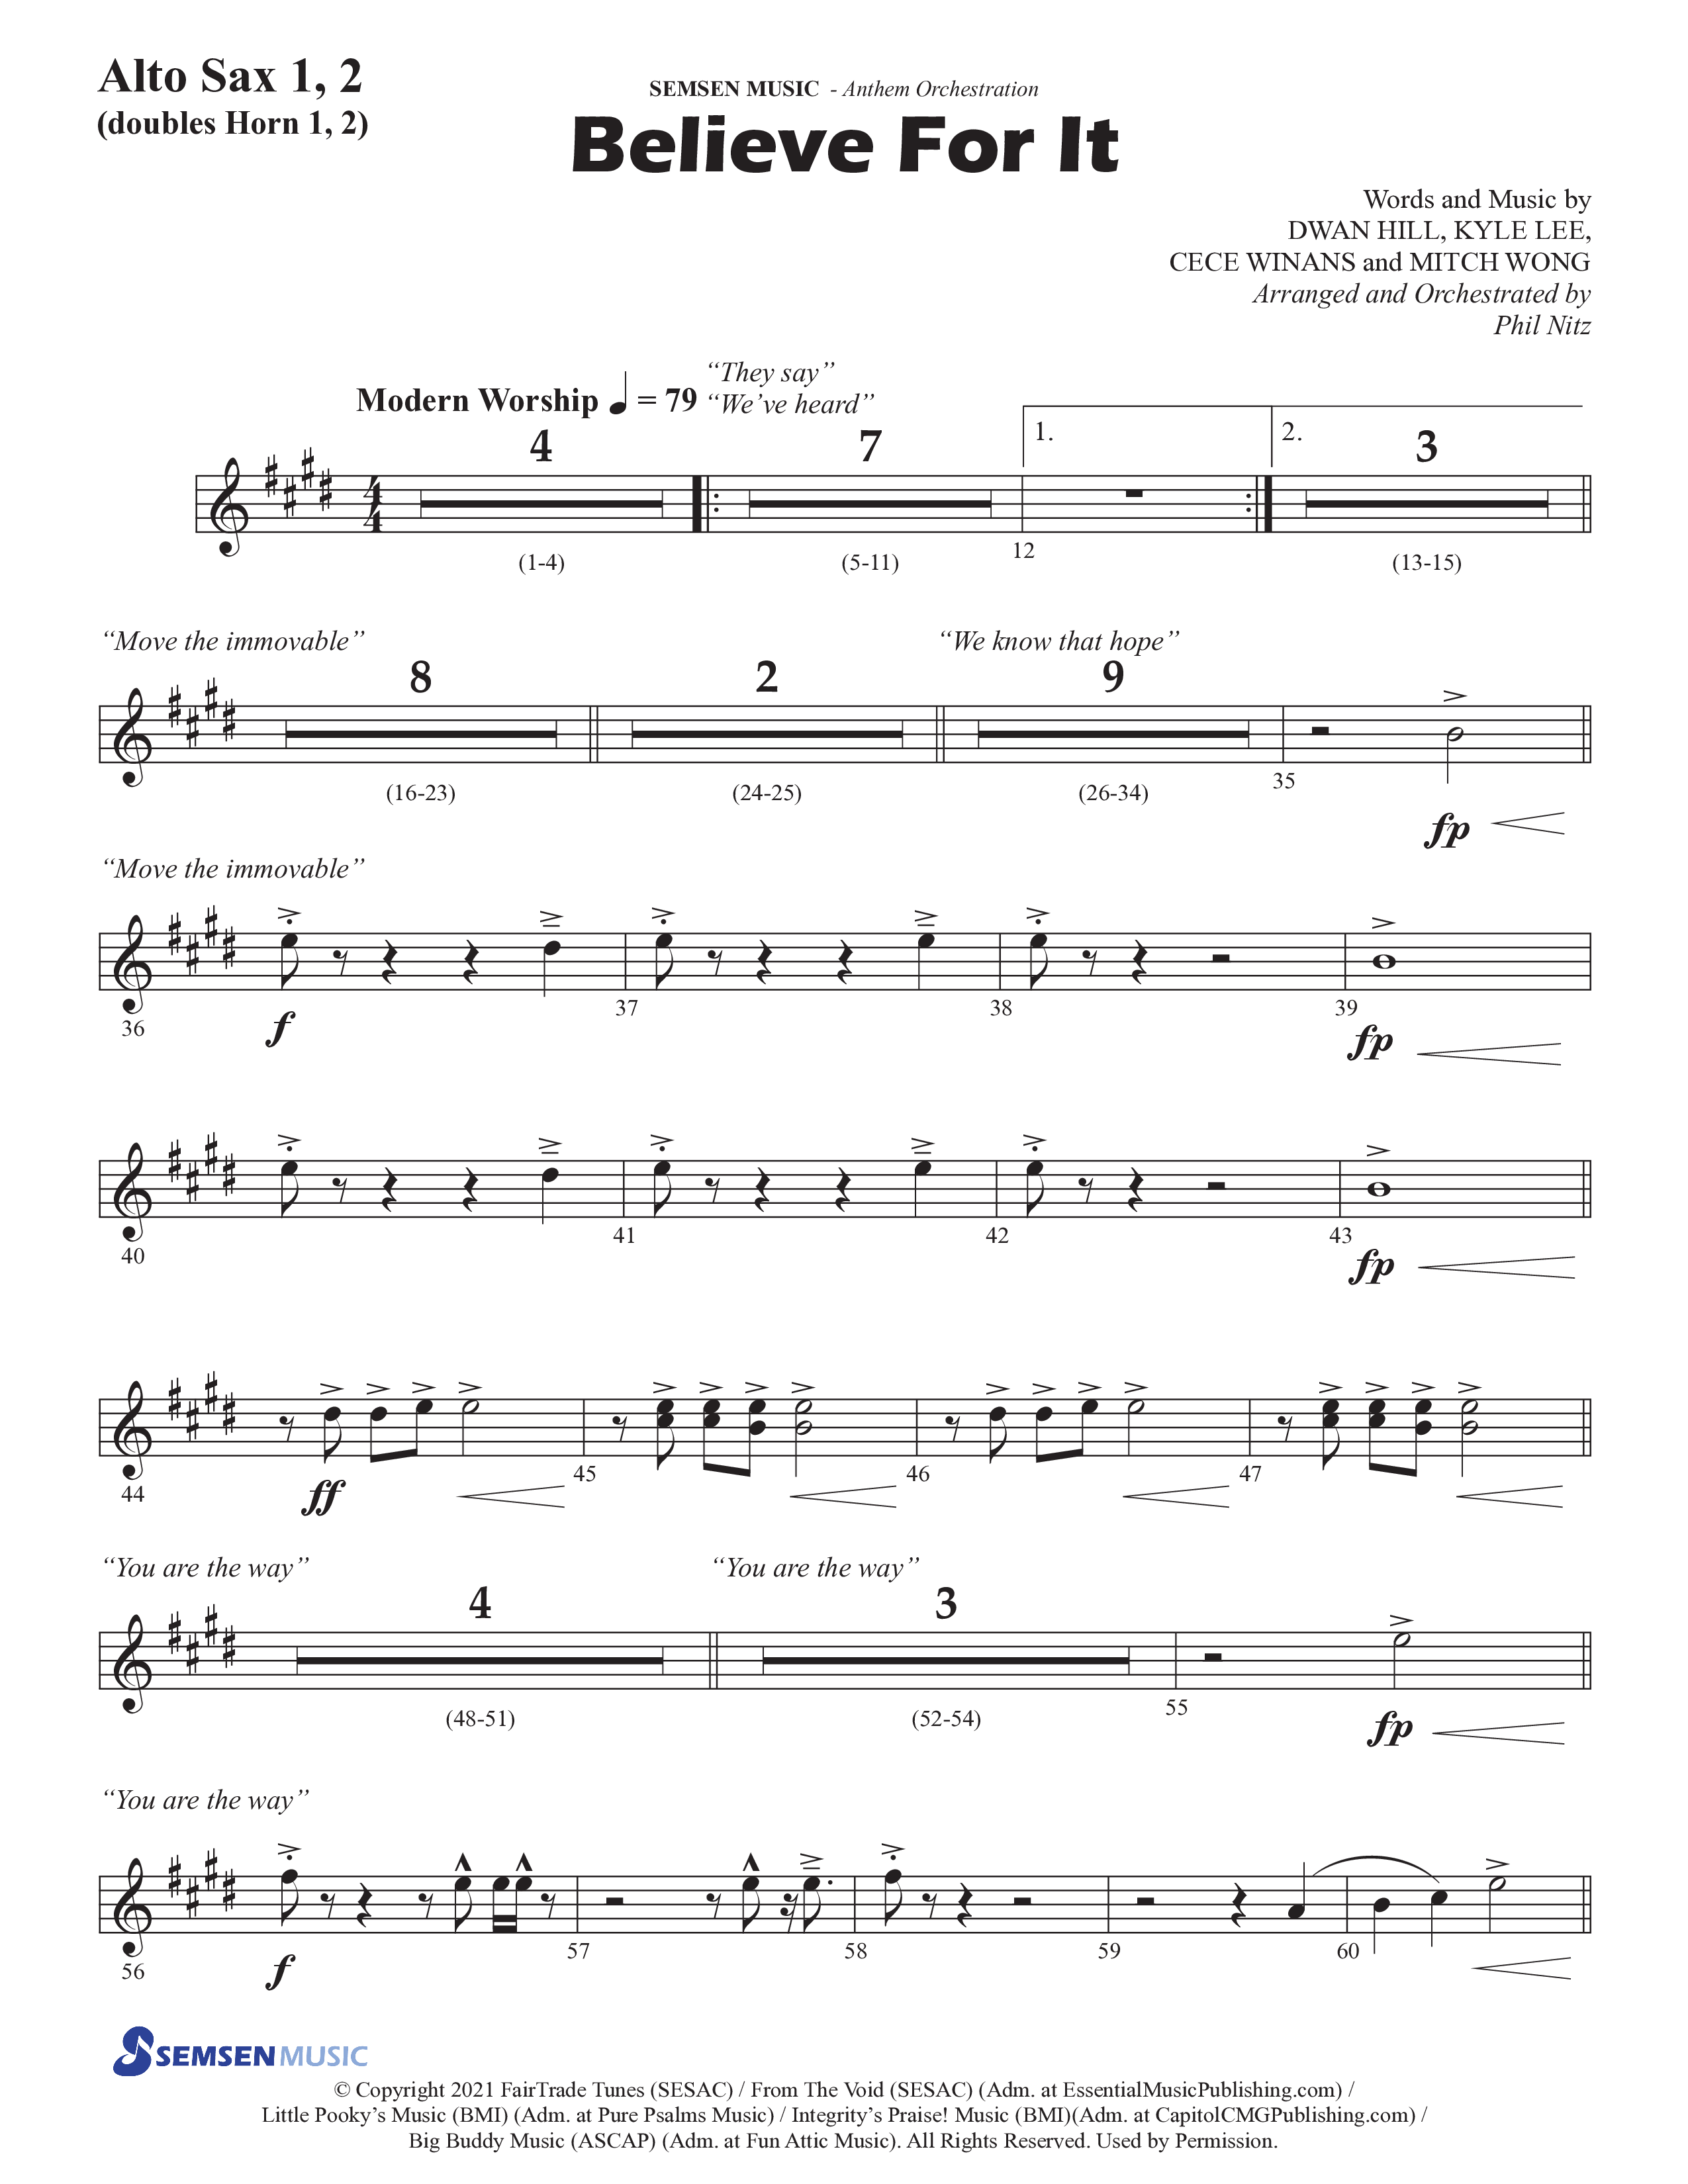 Believe For It (Choral Anthem SATB) Alto Sax 1/2 (Semsen Music / Arr. Phil Nitz)